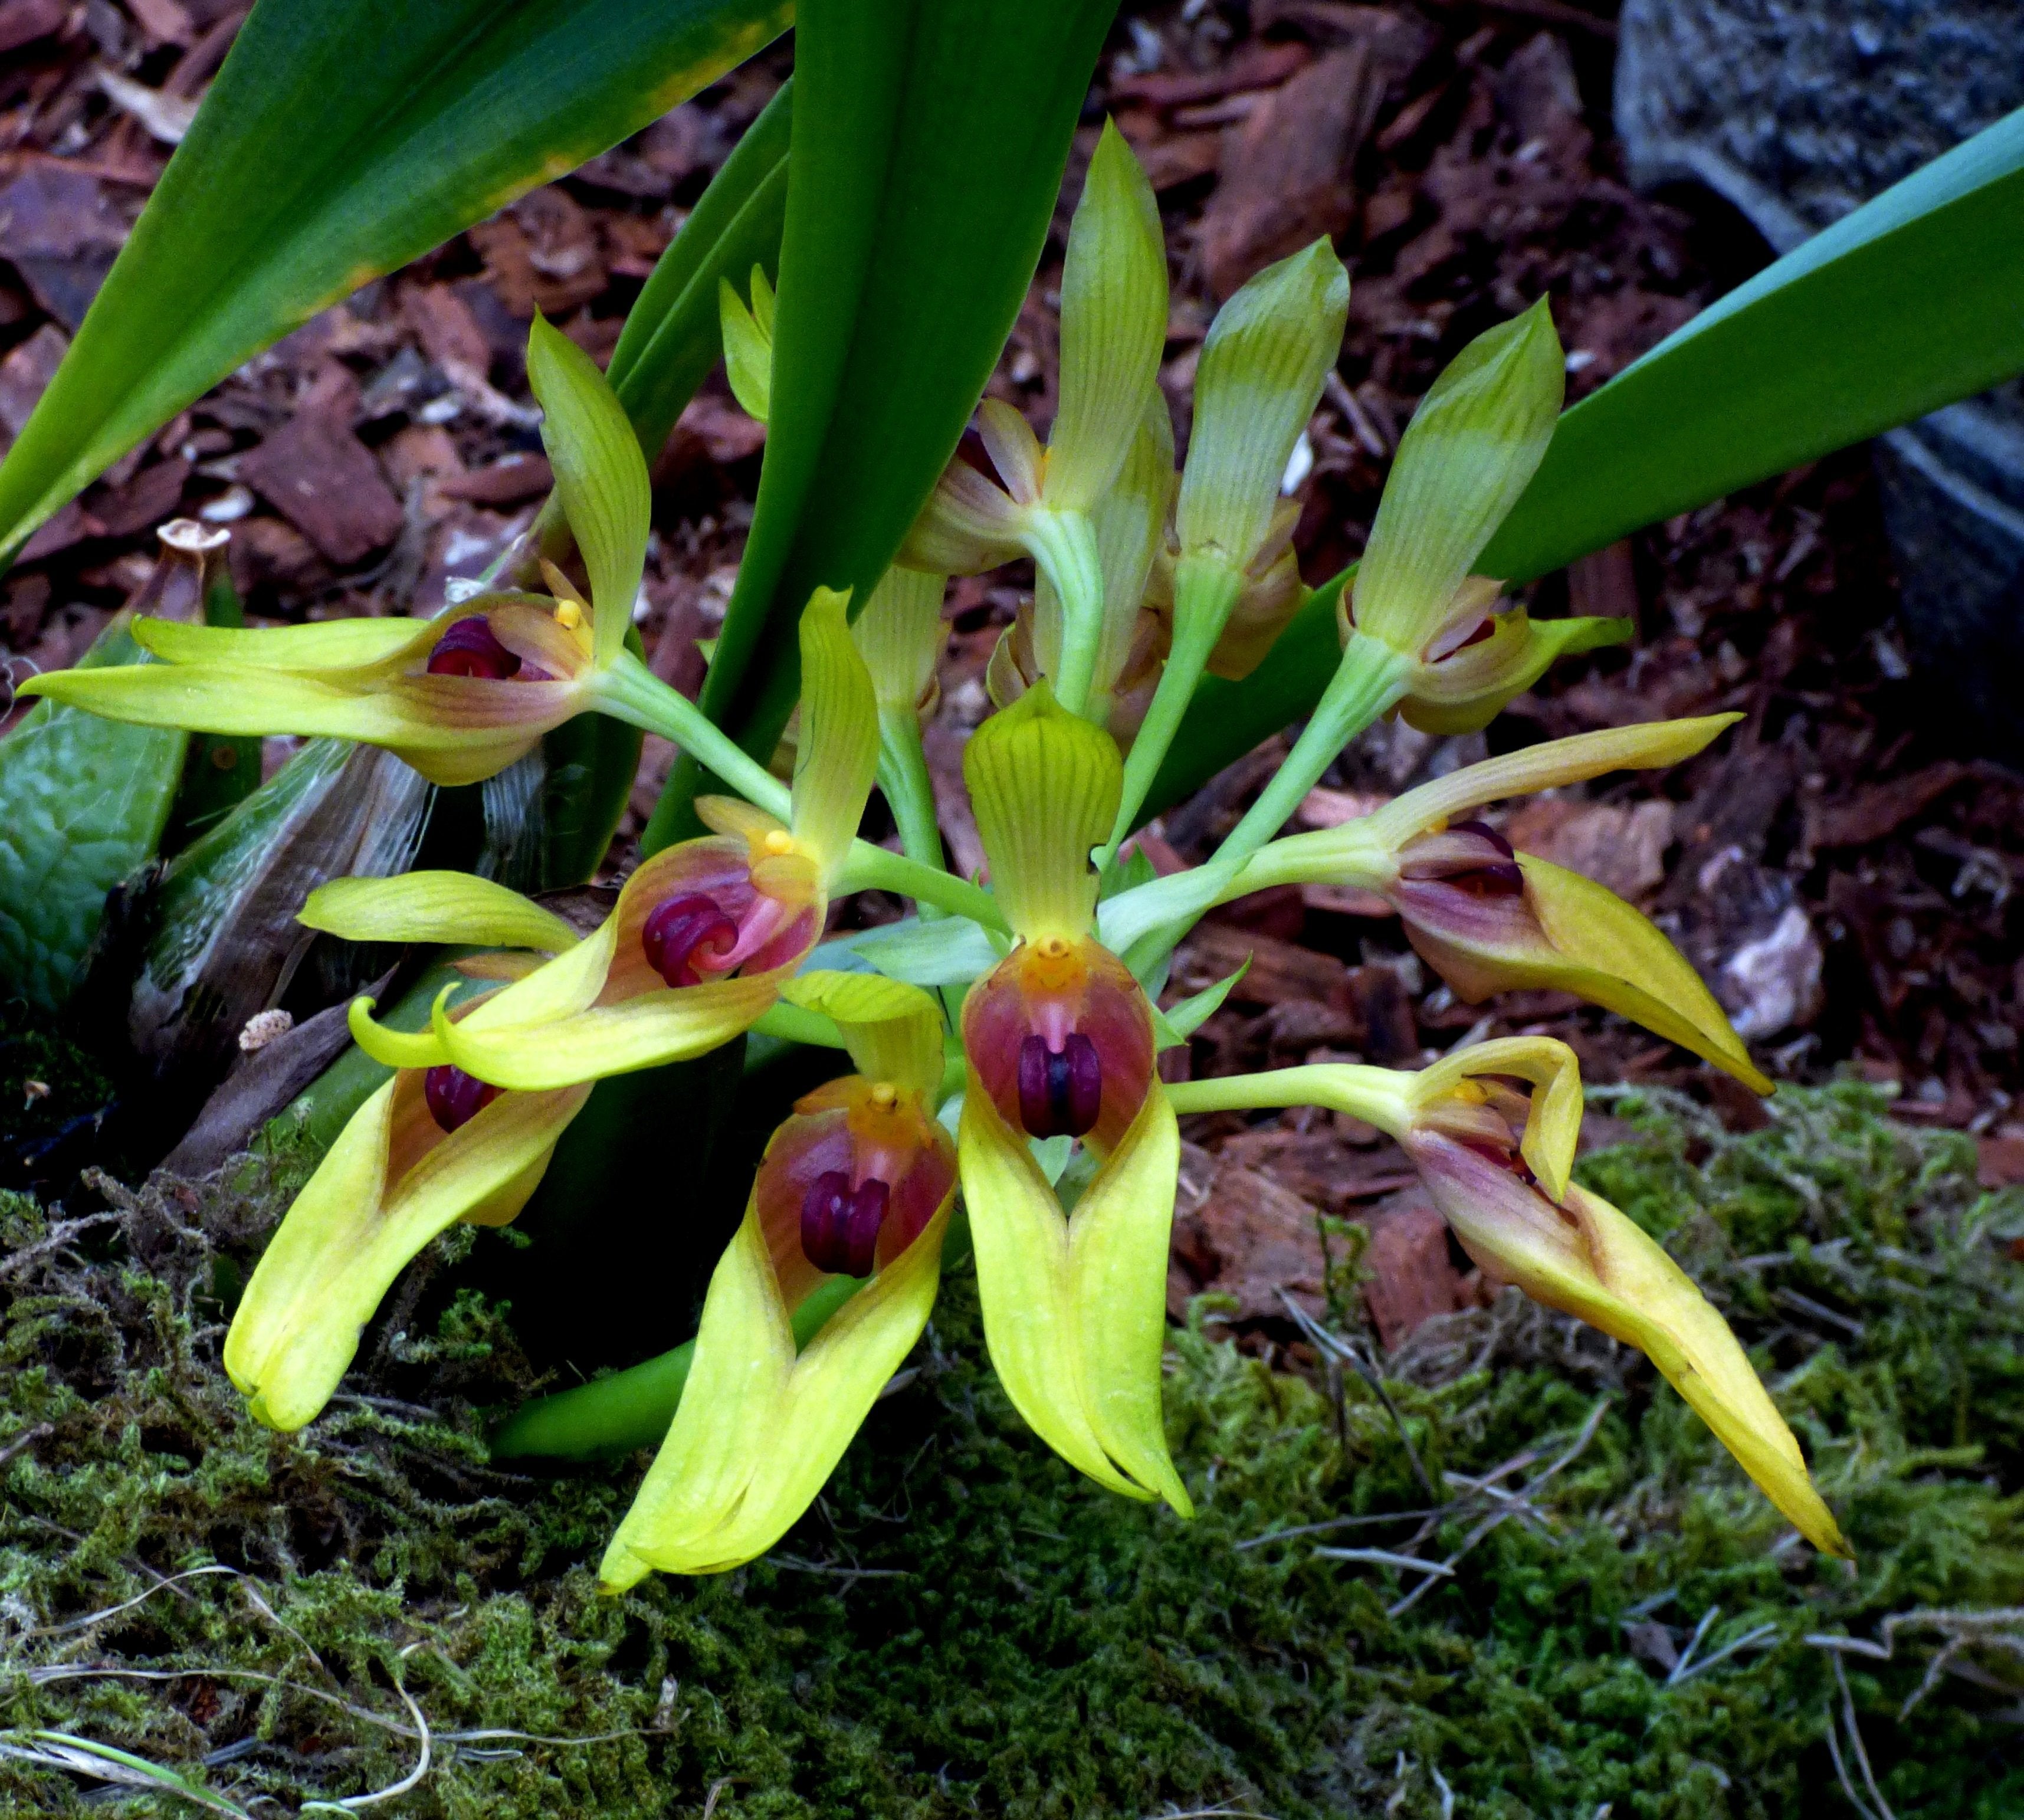 Bulbophyllum graveolens "Big"